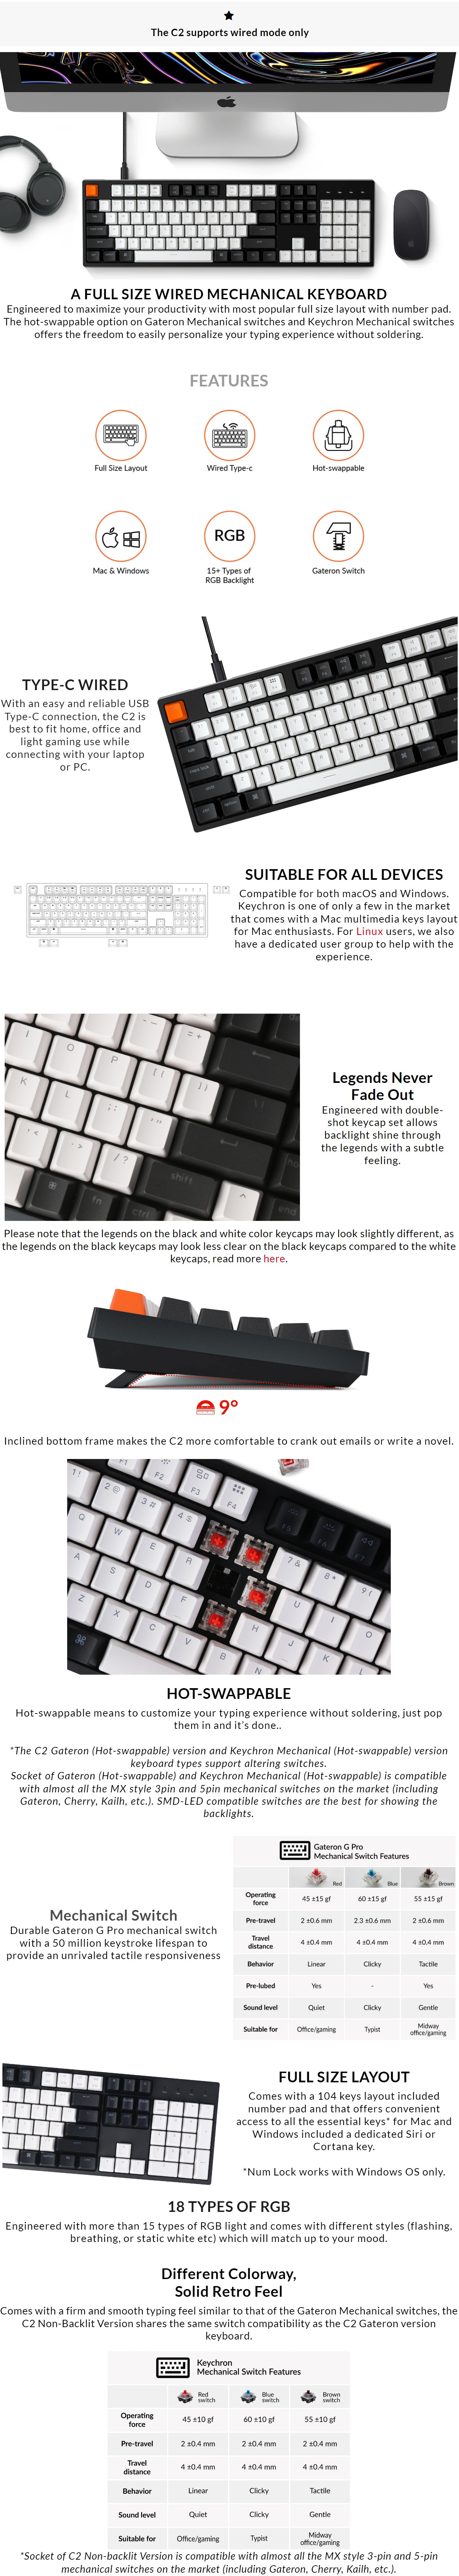 Keyboards-Keychron-C2-USB-Wired-Keyboard-Hot-Swappable-Gateron-RGB-Backlit-104-Keys-Mechanical-Keyboard-Brown-Switch-KBKCC2H3BROWN-3